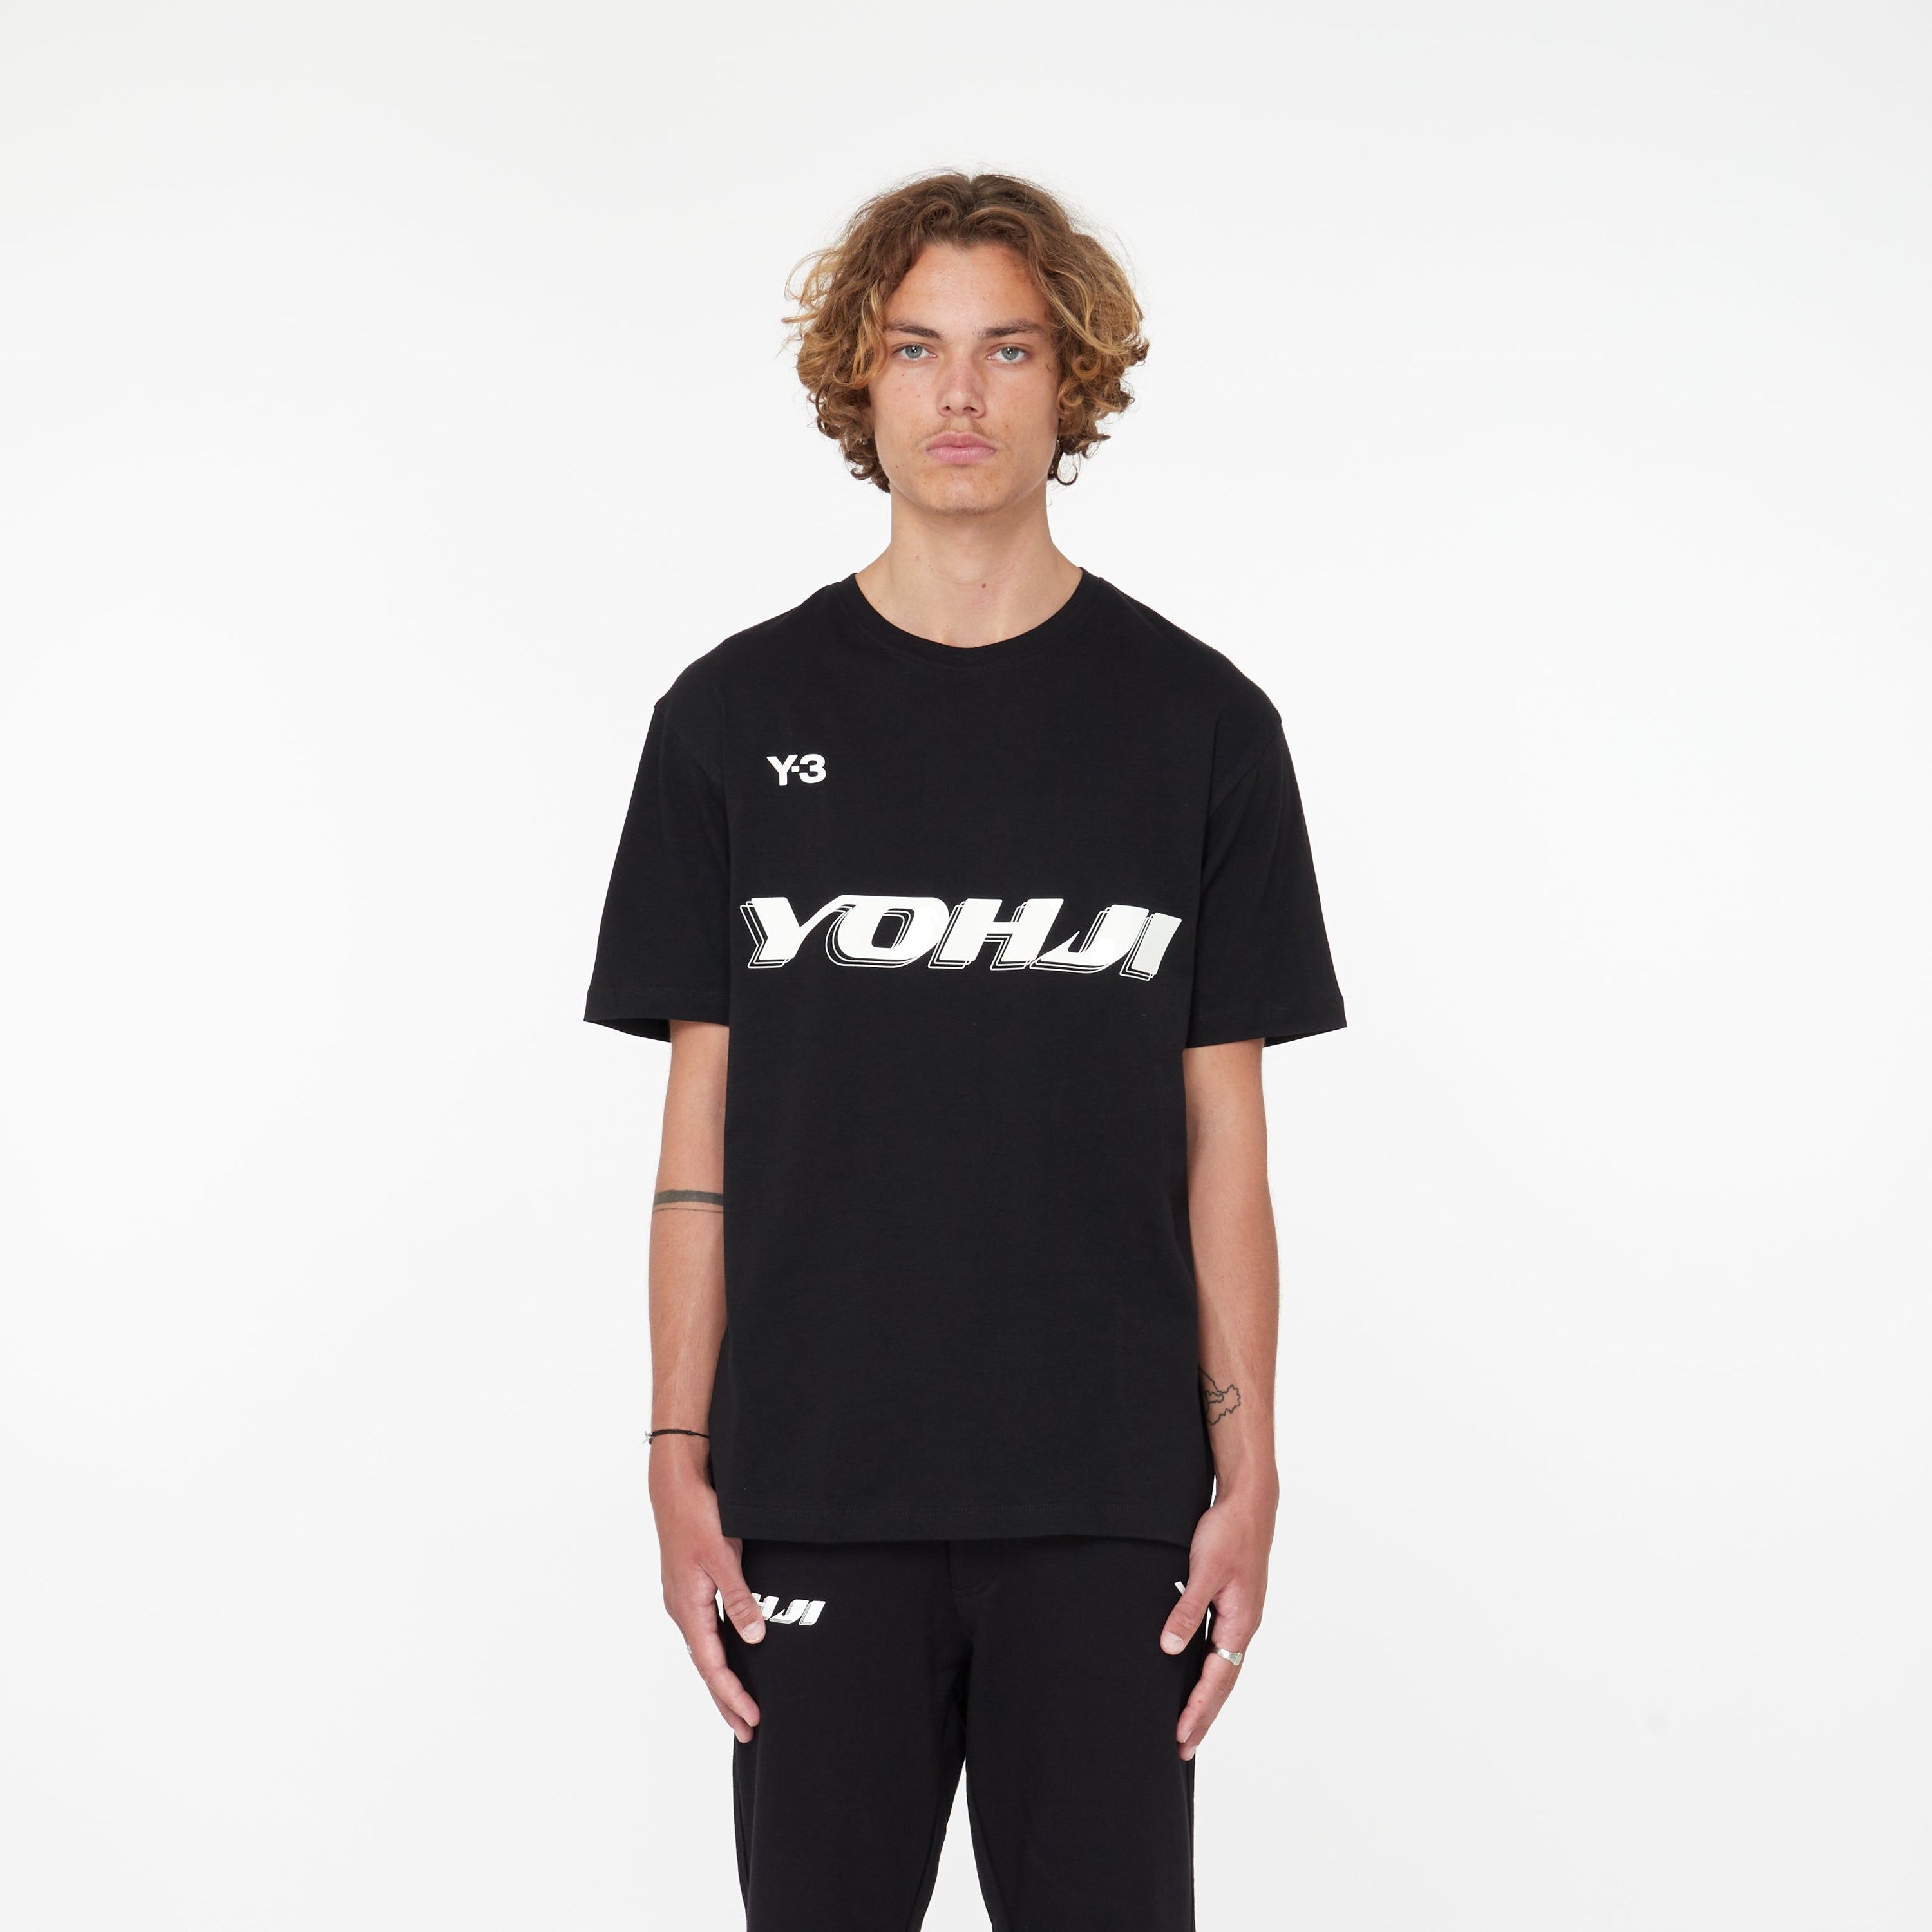 Tee Shirt Graphic Yohji - Lesthete y3